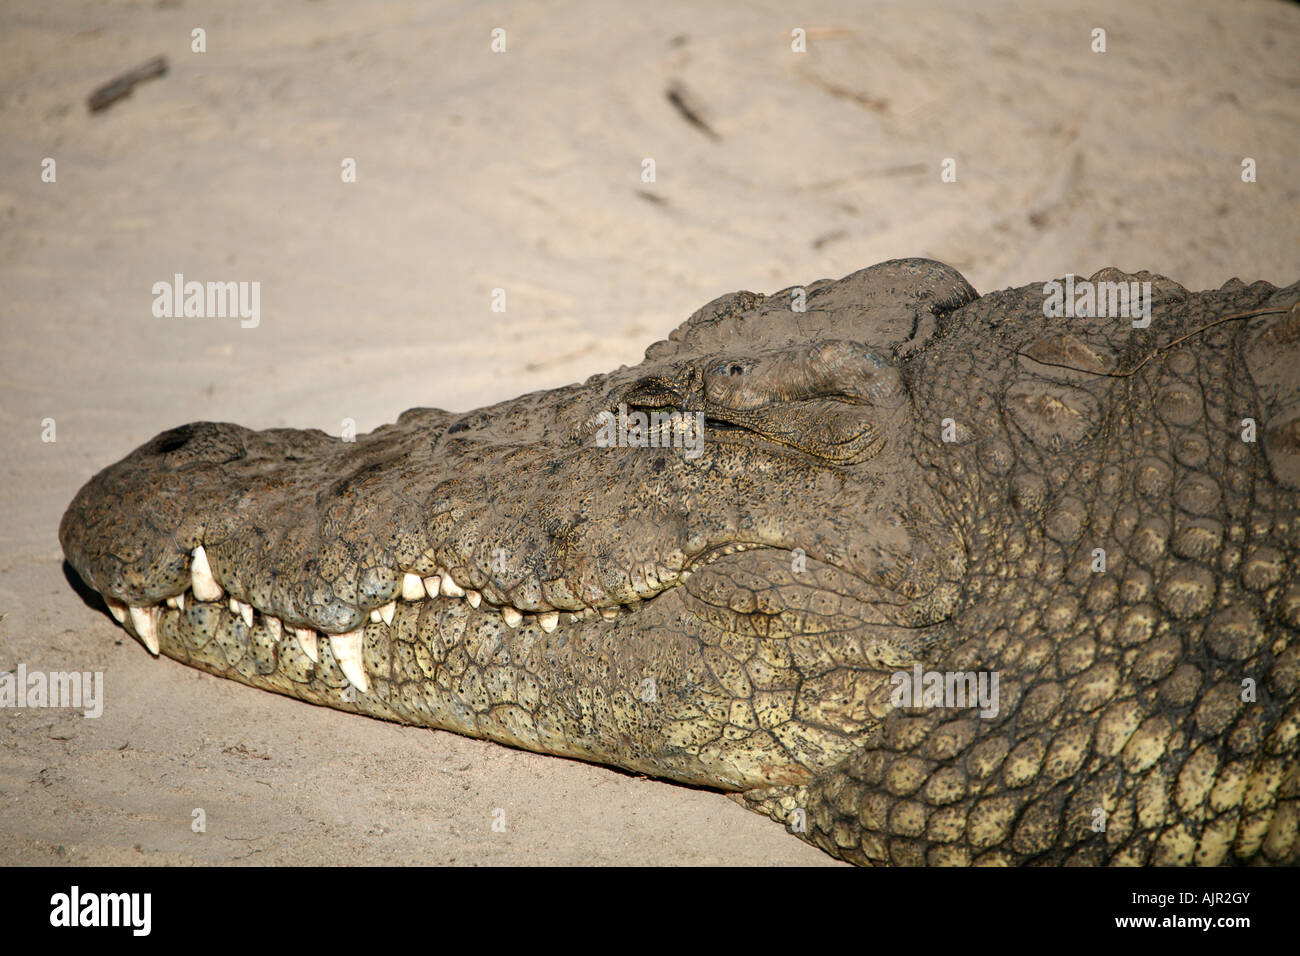 Crocodile close up Stock Photo